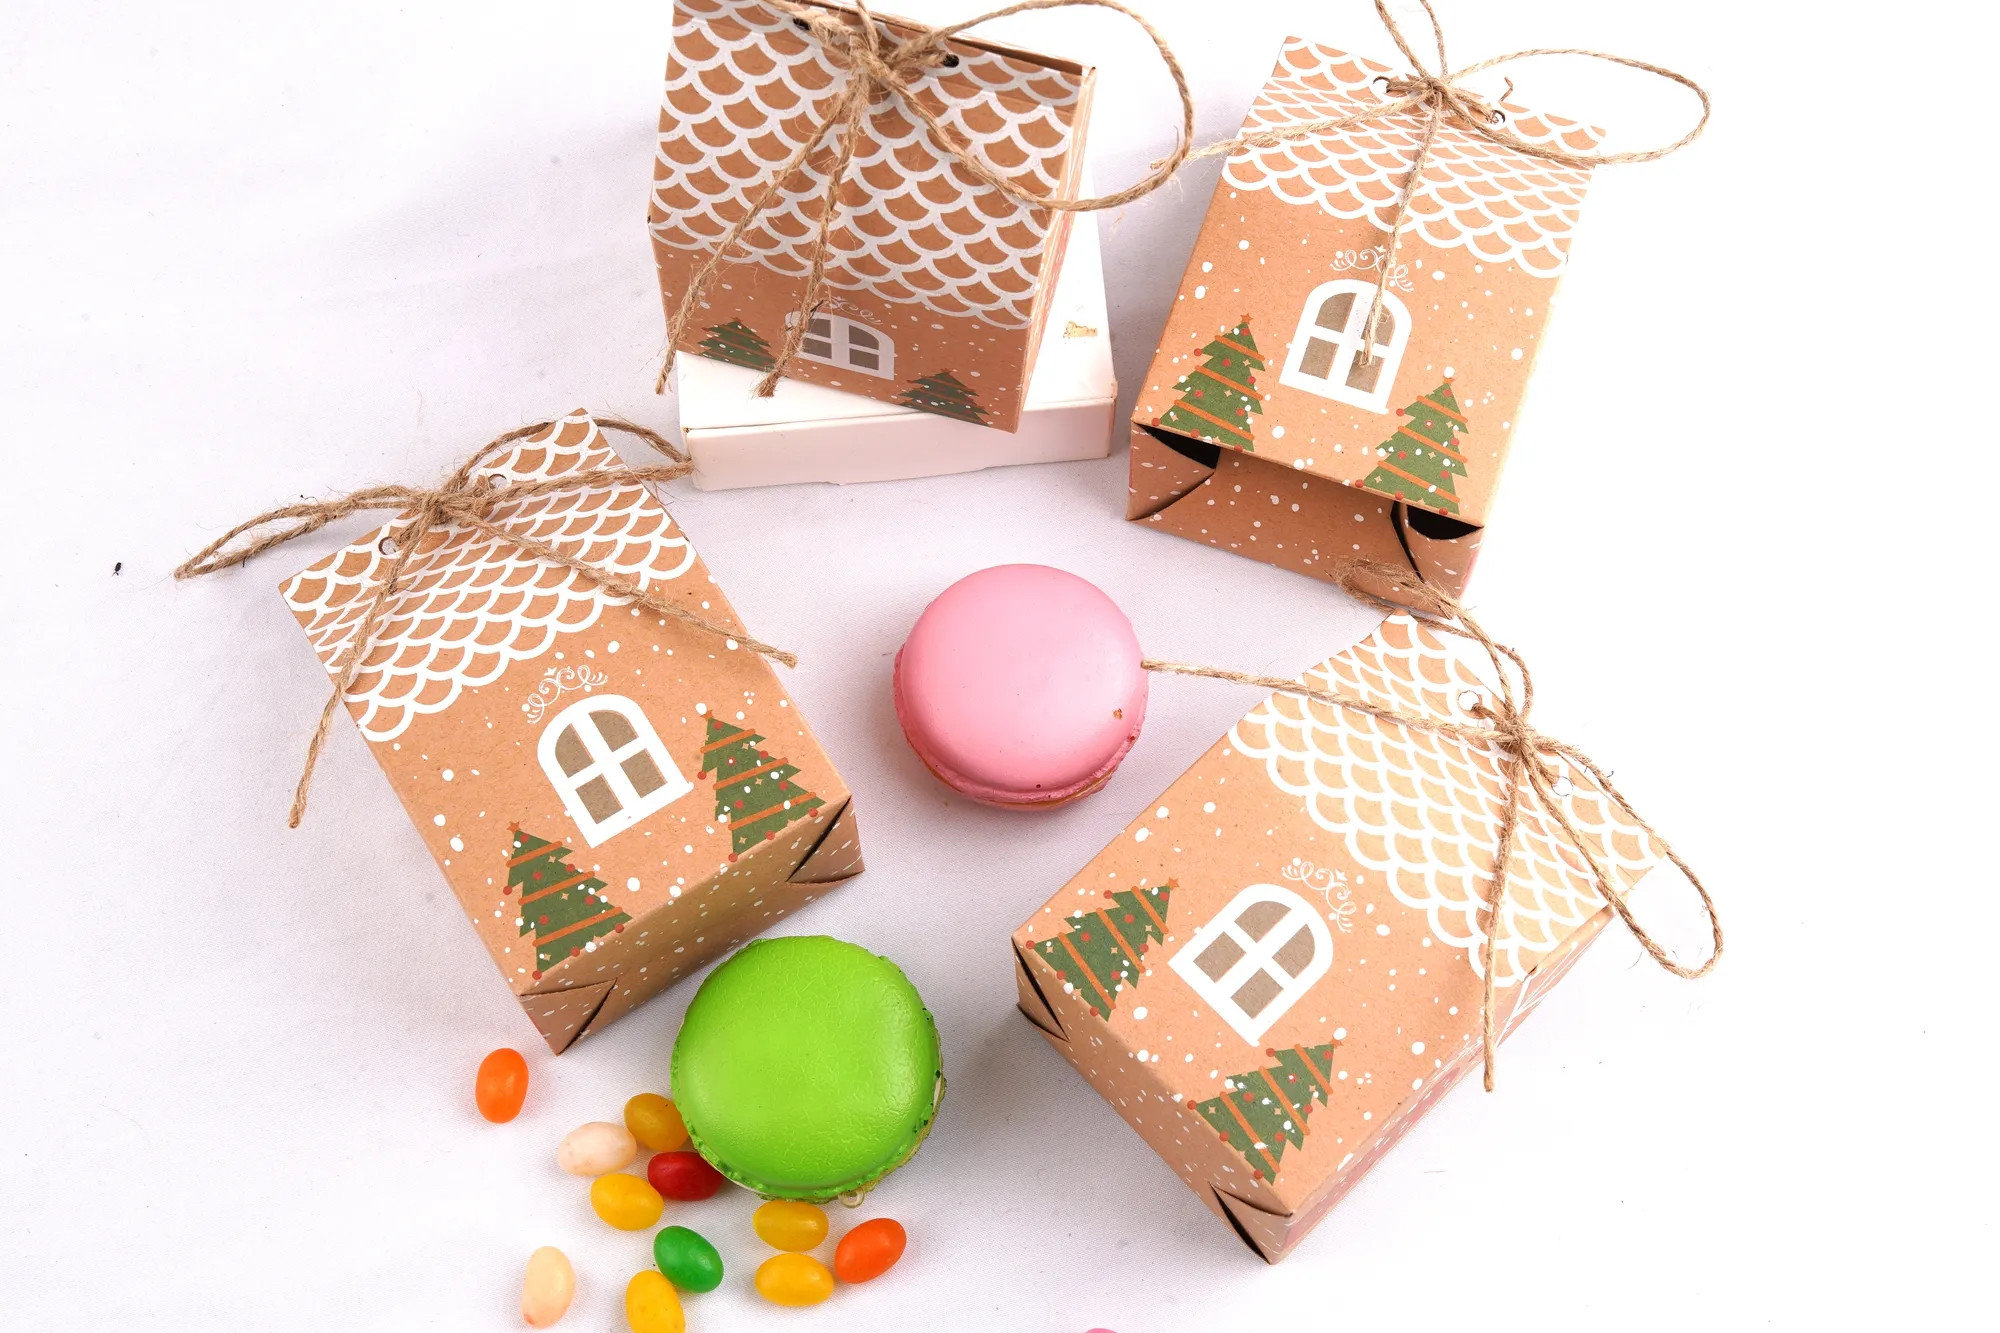 Small Collapsible Christmas House Shape Gift Box